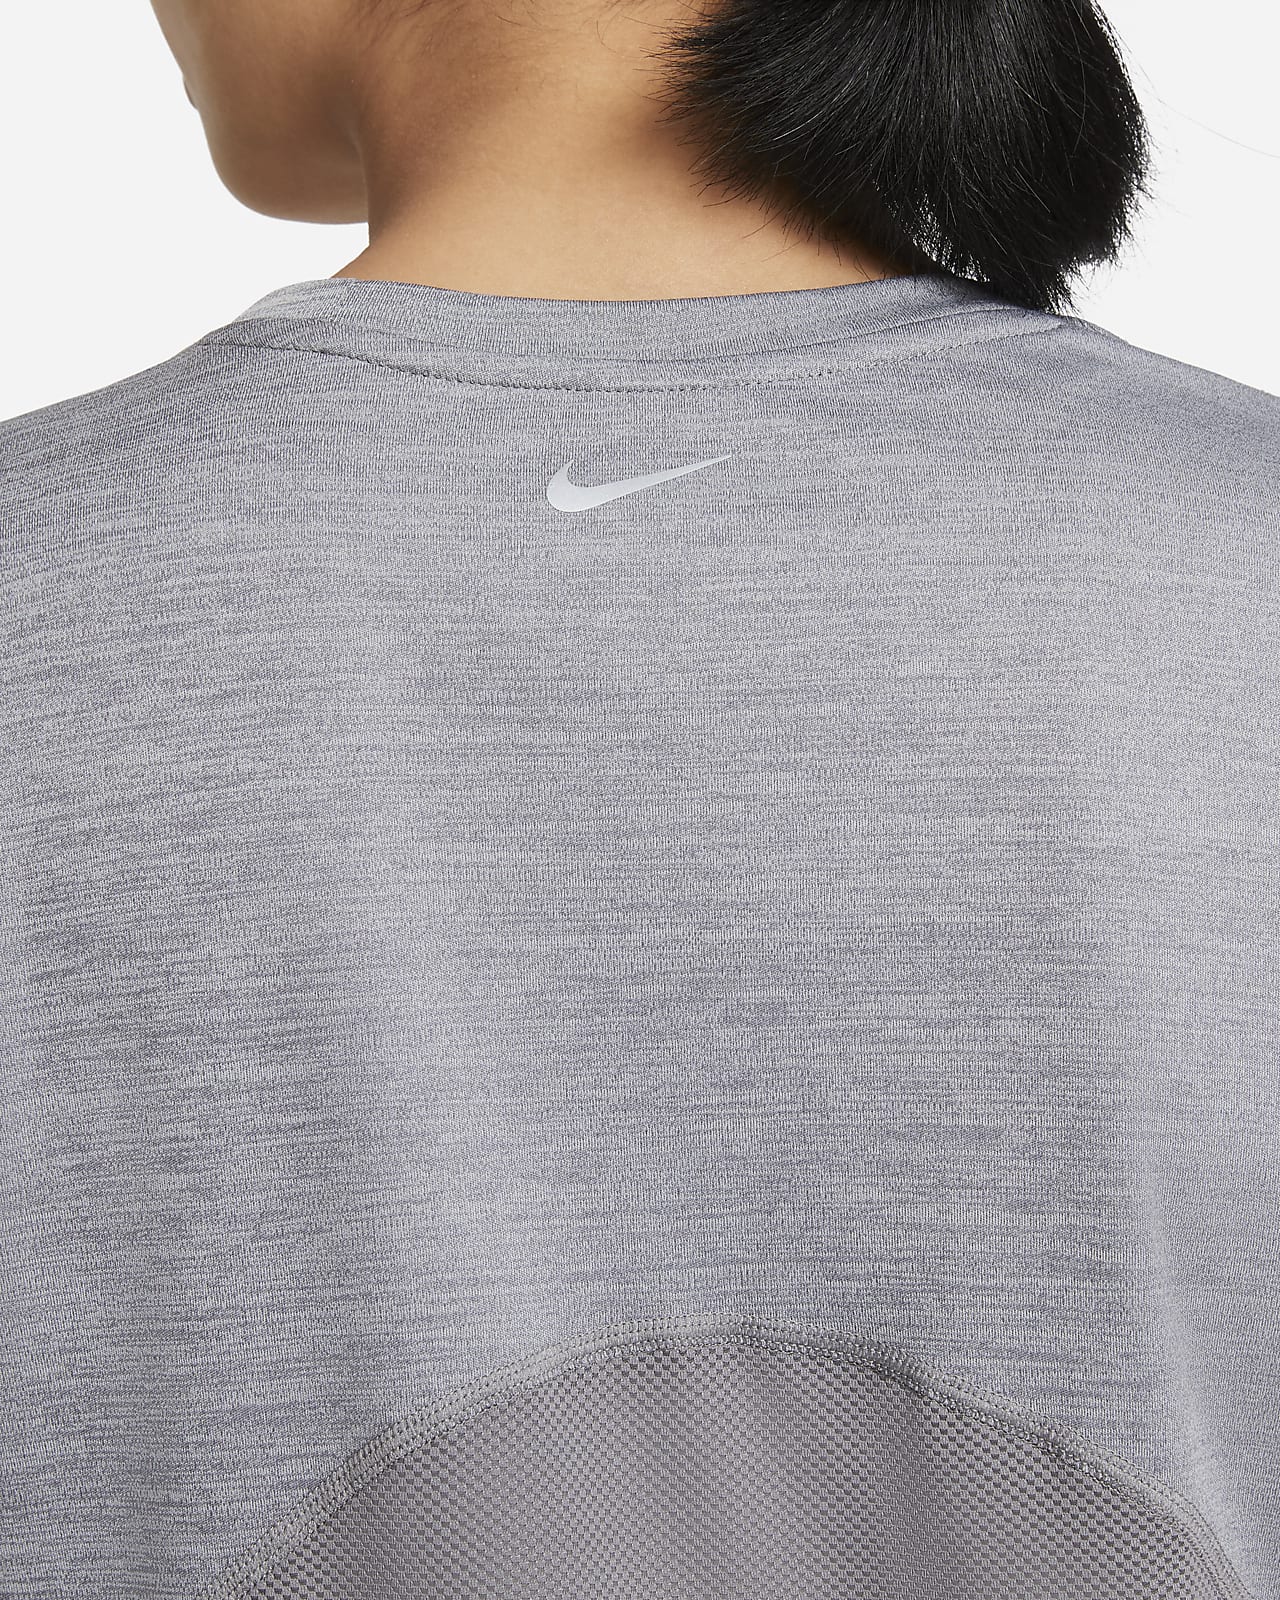 Nike Miler Top. Women\'s Short-Sleeve Running